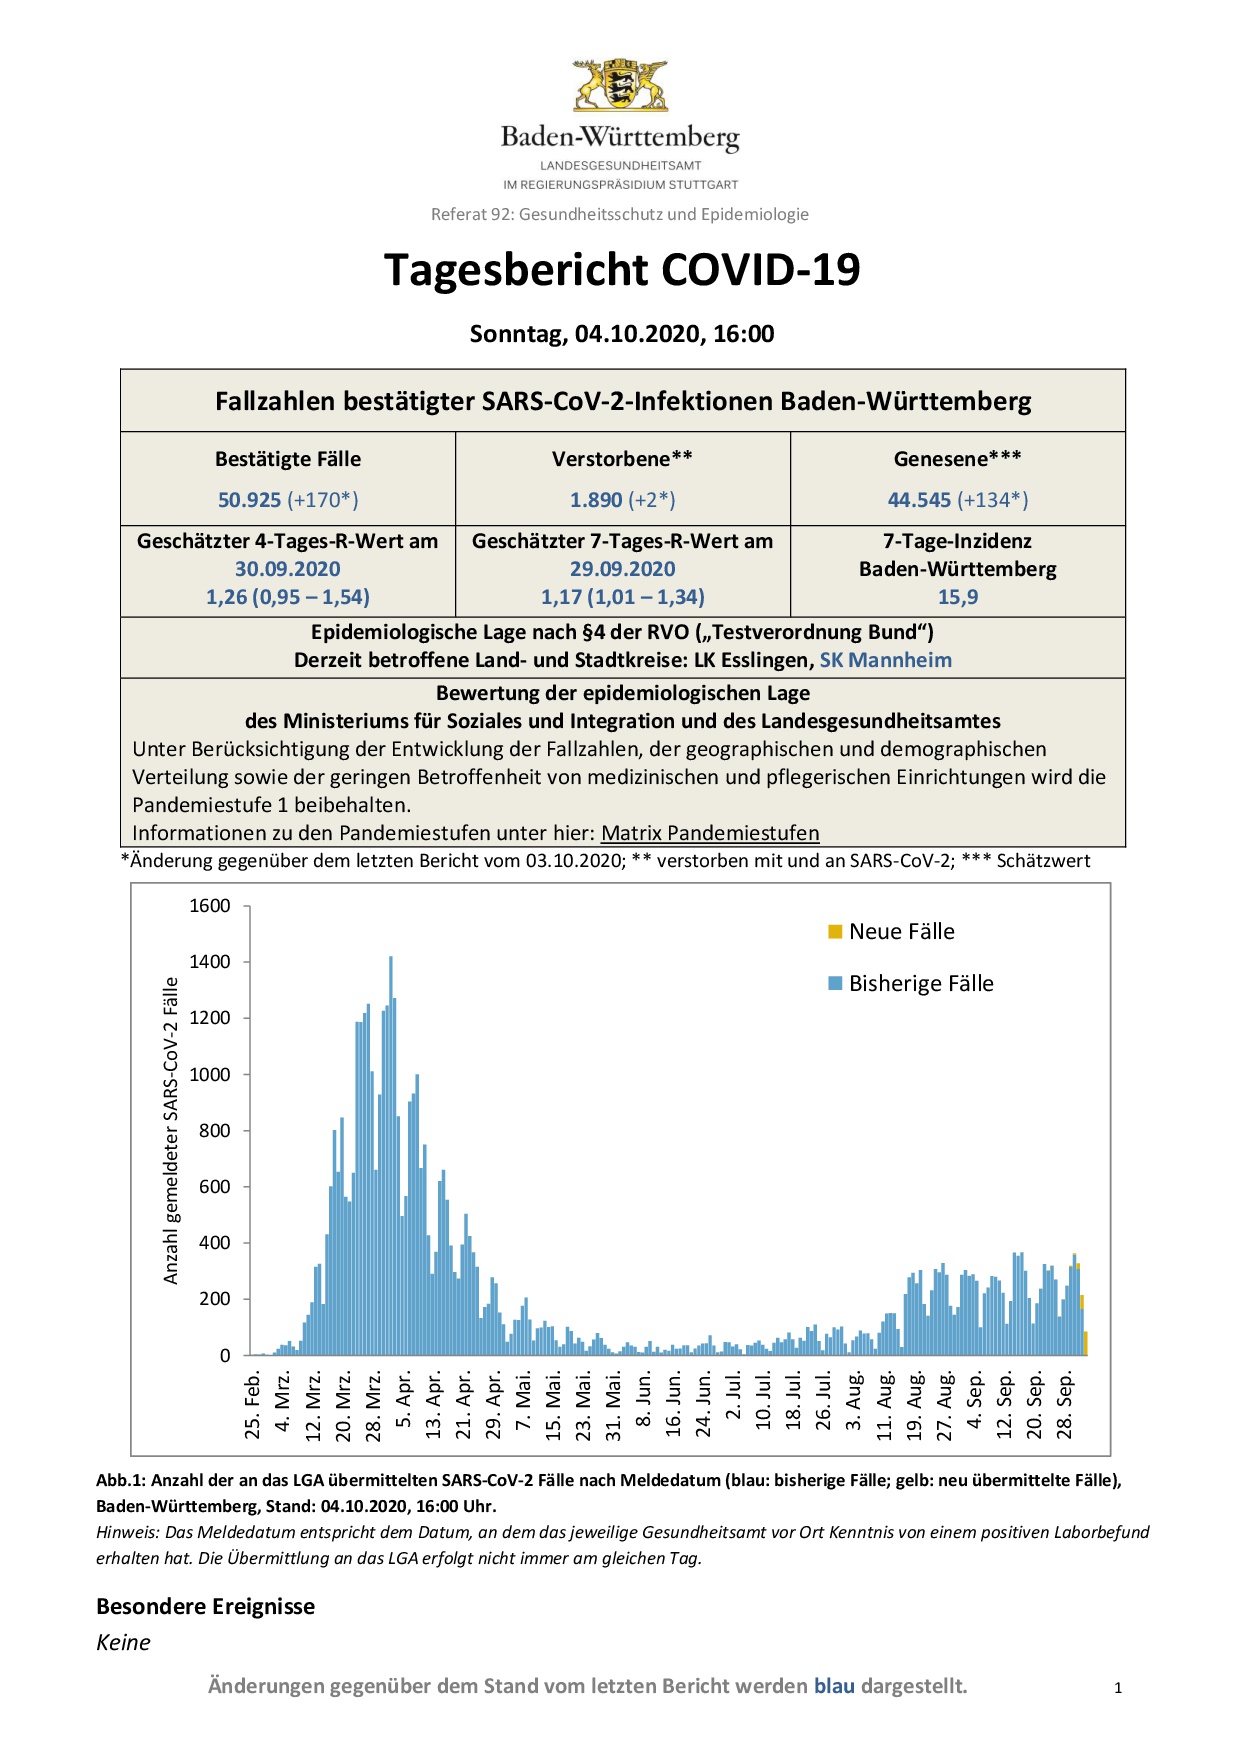 COVID-19 Tagesbericht (04.10.2020) des Landesgesundheitsamts Baden-Württemberg